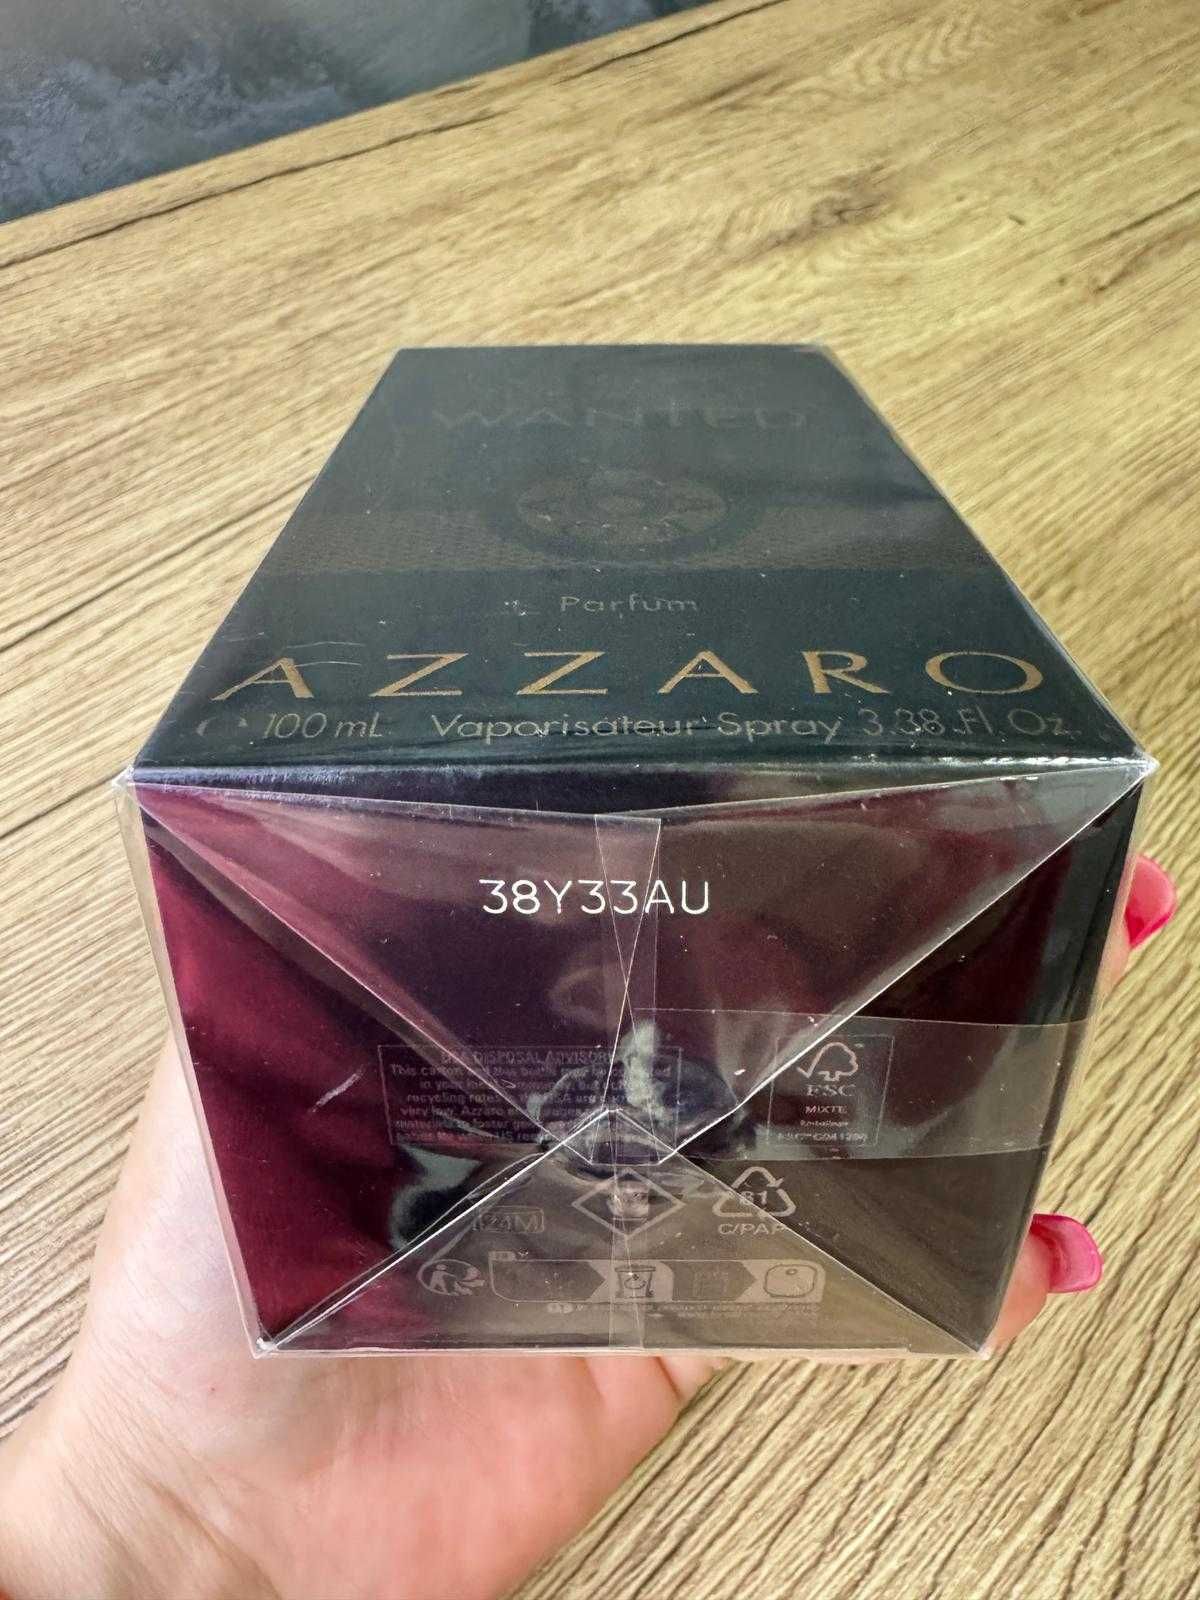 Azzaro The Most Wanted PARFUM 100ml - Extract de Parfum, 100% original